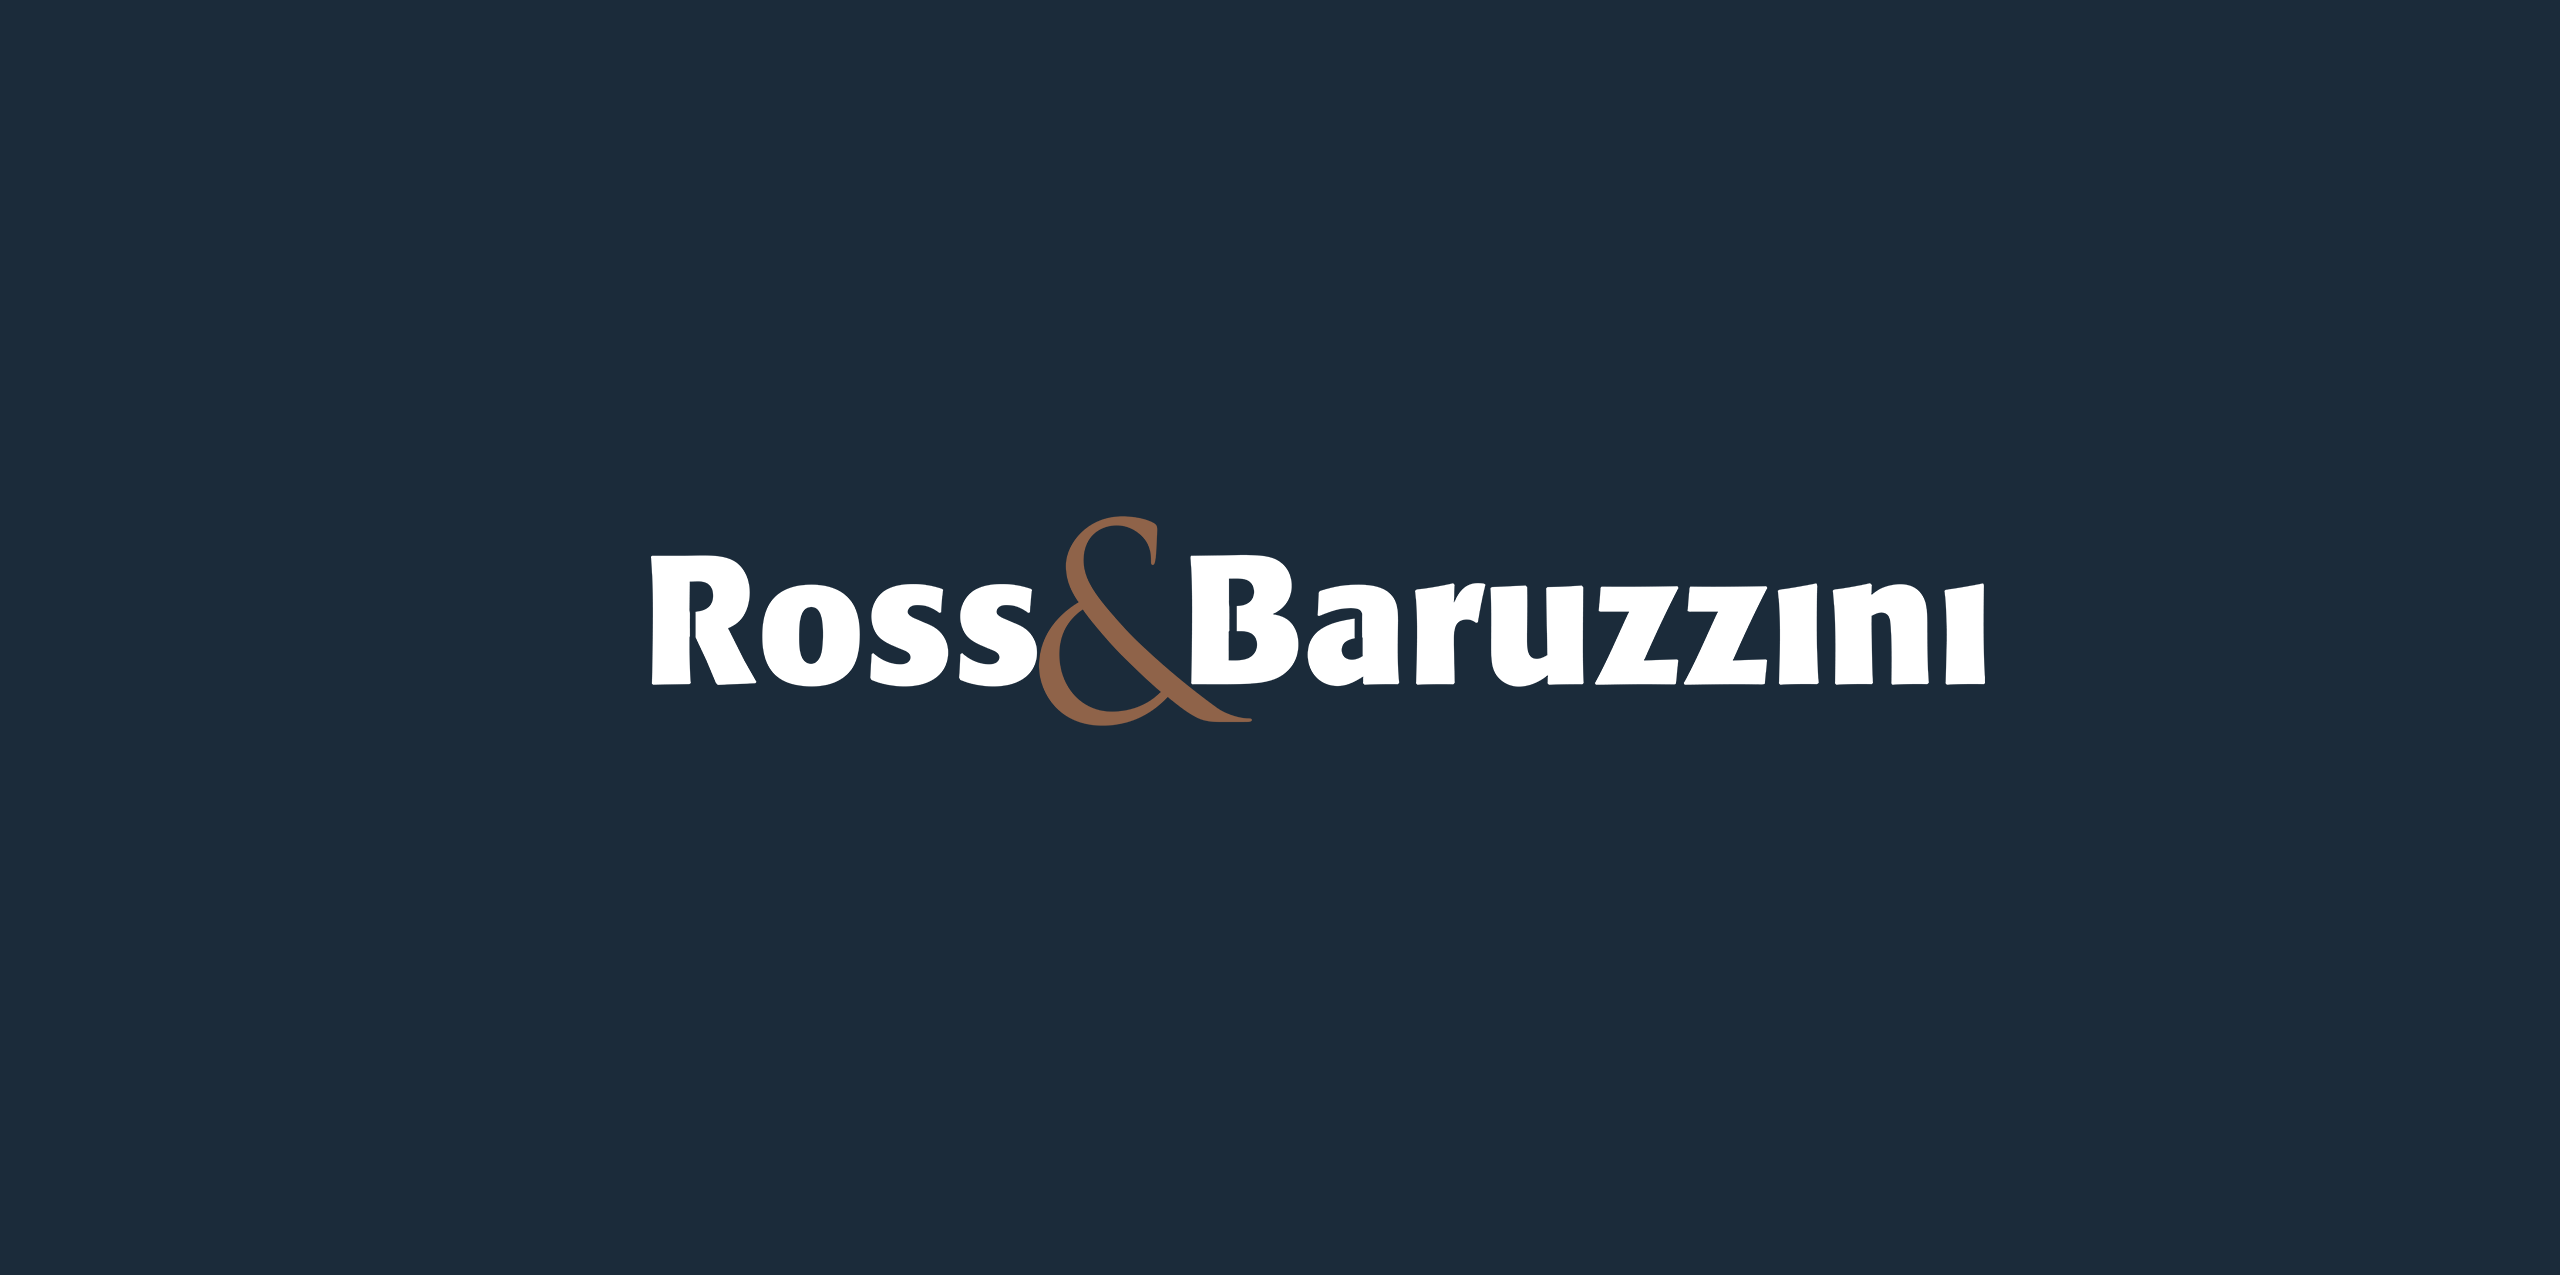 Ross & Baruzzini PLACEHOLDER